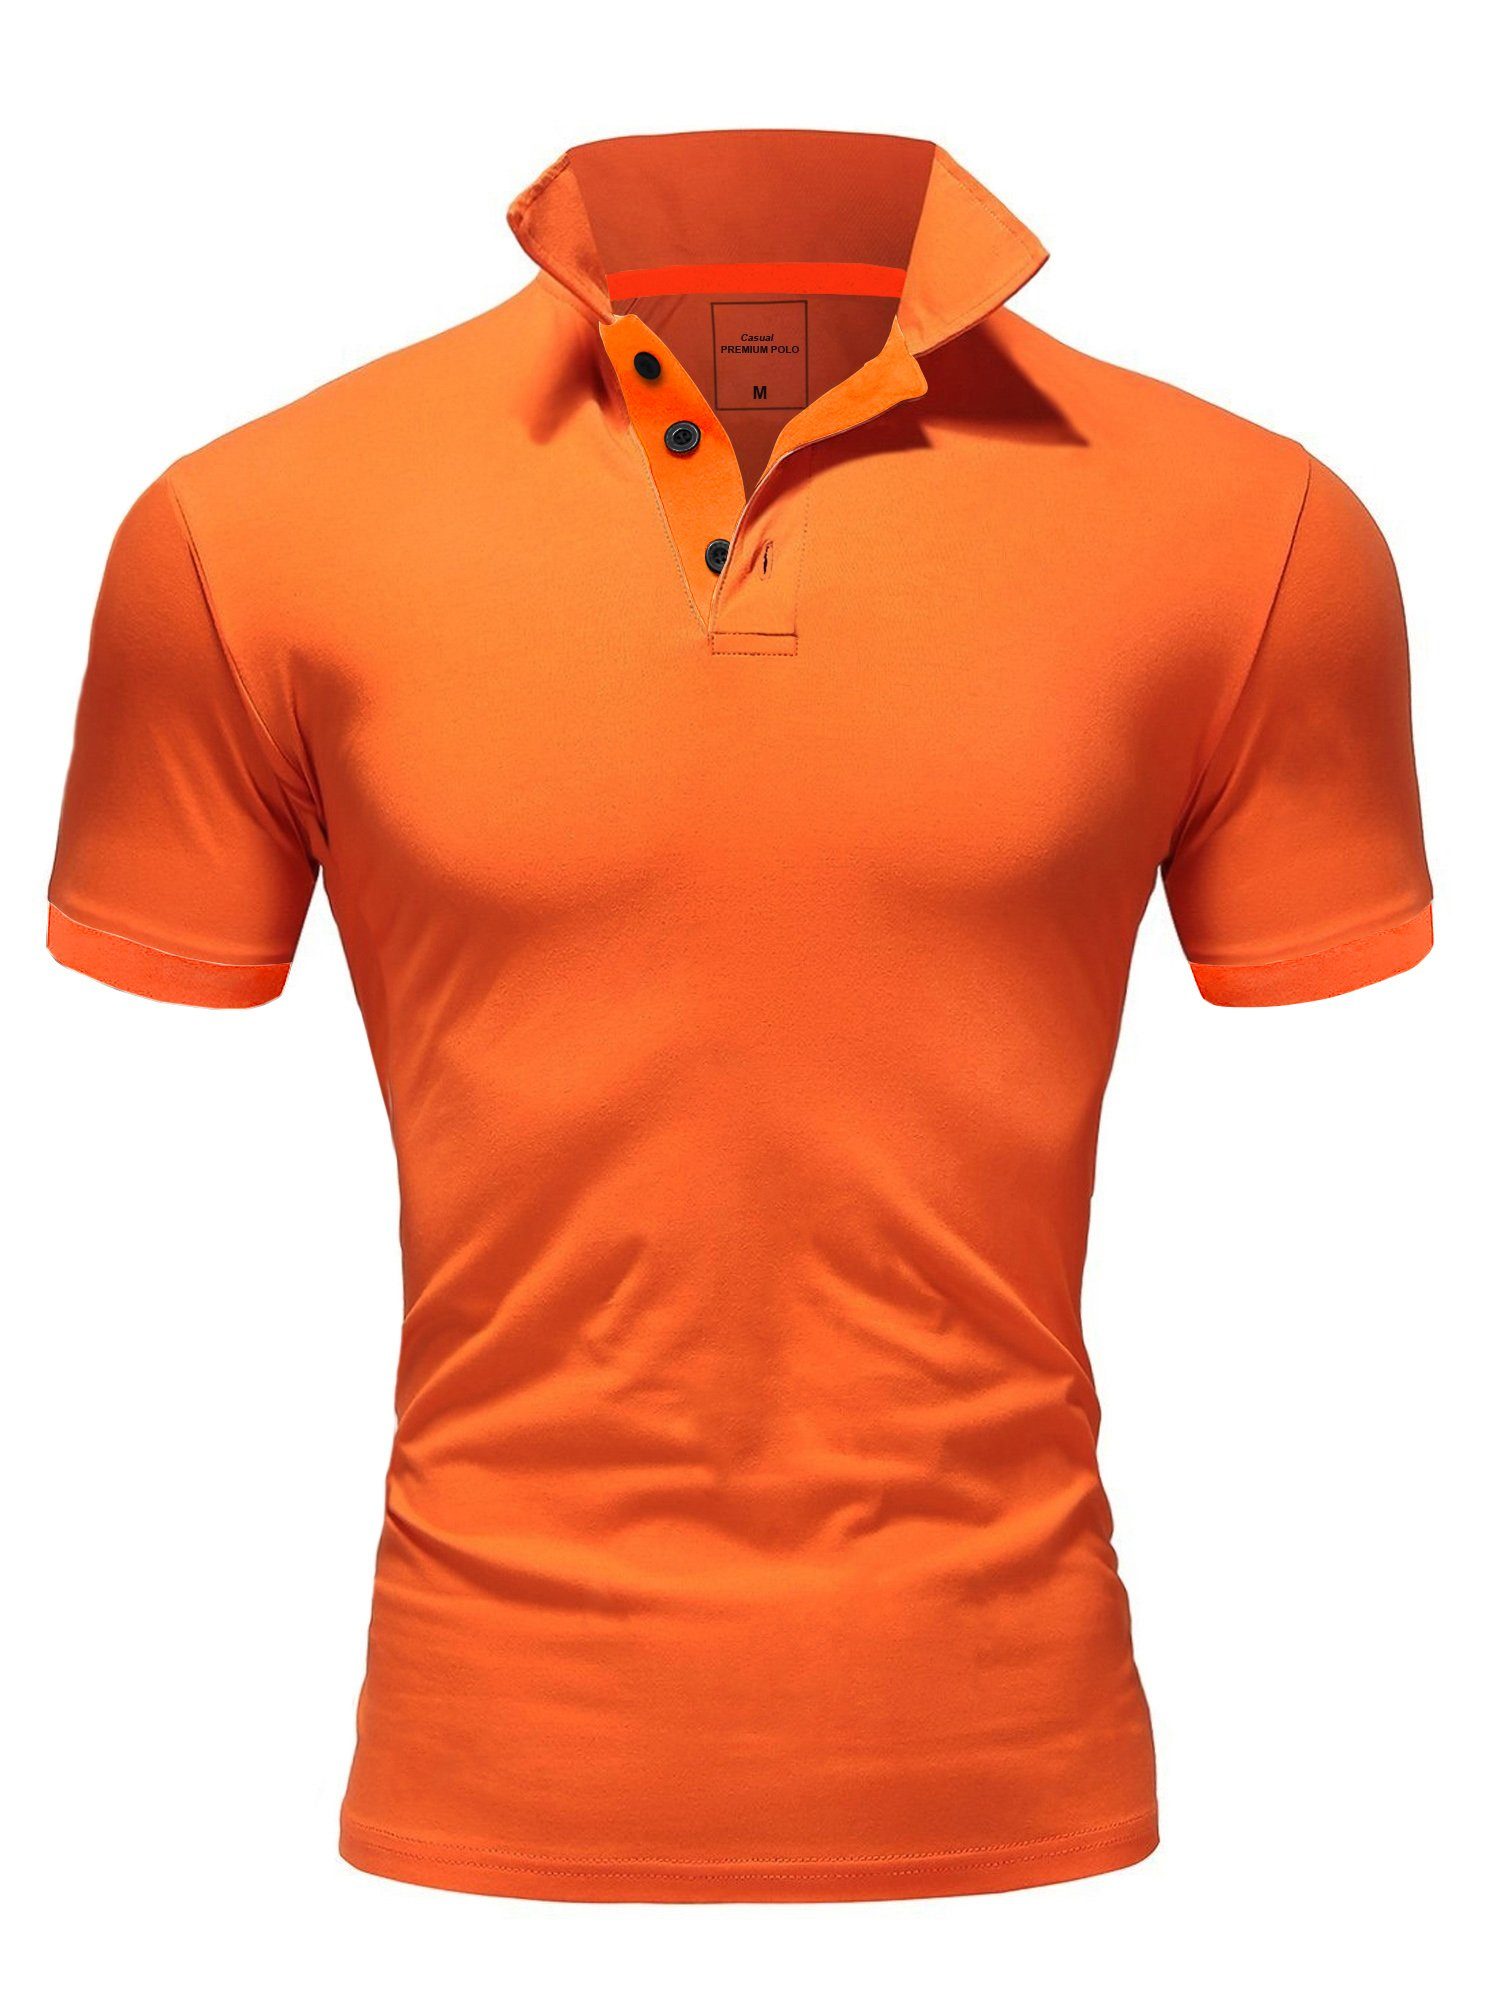 Orange Poloshirt MAINE Basic Amaci&Sons Poloshirt Kurzarm